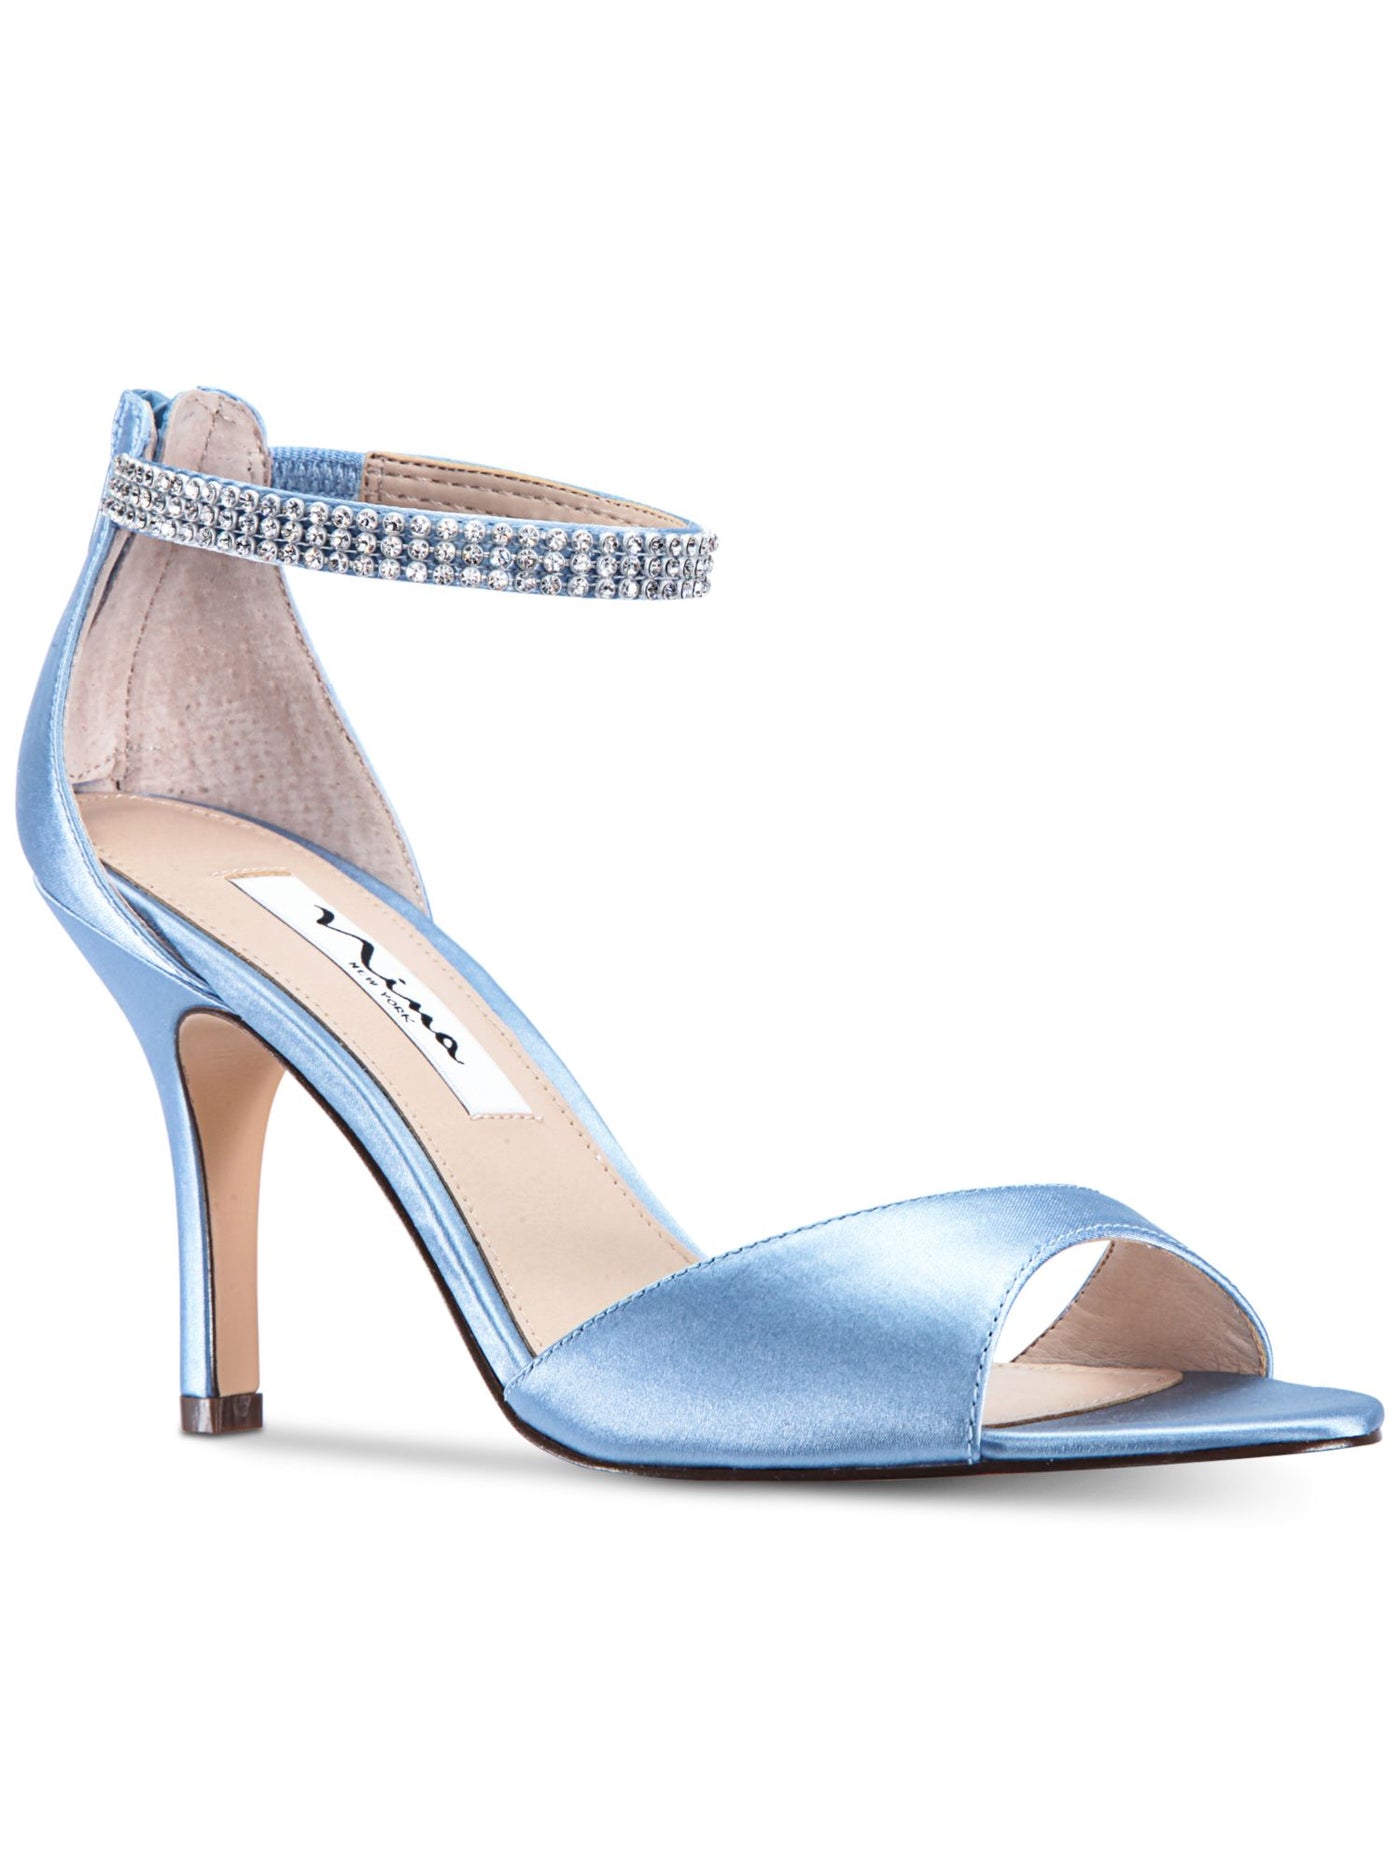 NINA Womens Aqua Crystal Like Beaded Detail Side Elastic Ankle Strap Cushioned Volanda Almond Toe Stiletto Zip-Up Dress Sandals 8.5 M